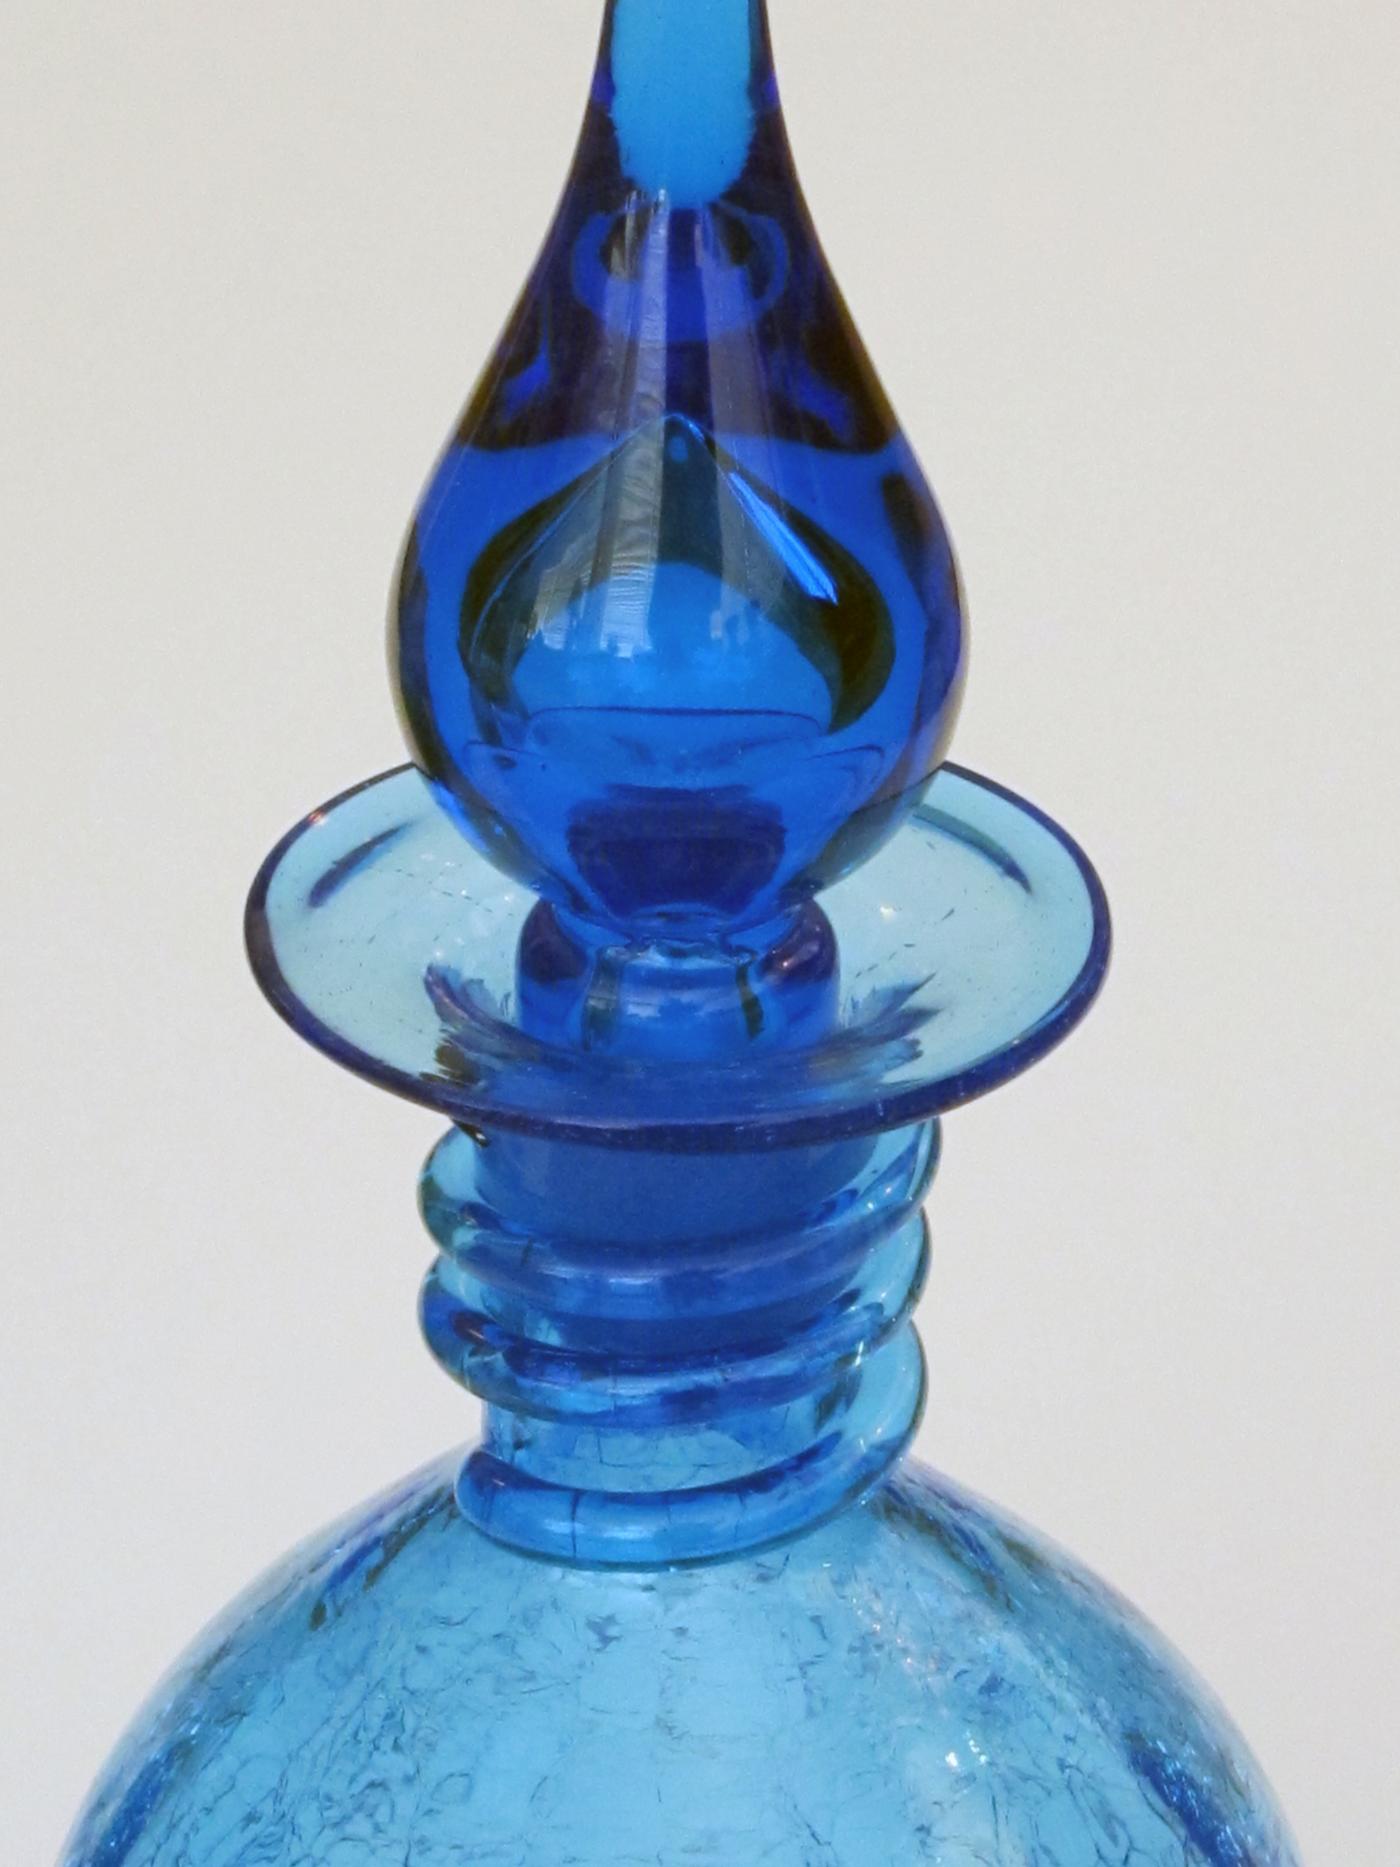 Blenko Glass Co A Rare Set Of 3 American Art Glass Decanters By Joel Myers Blenko Glassworks